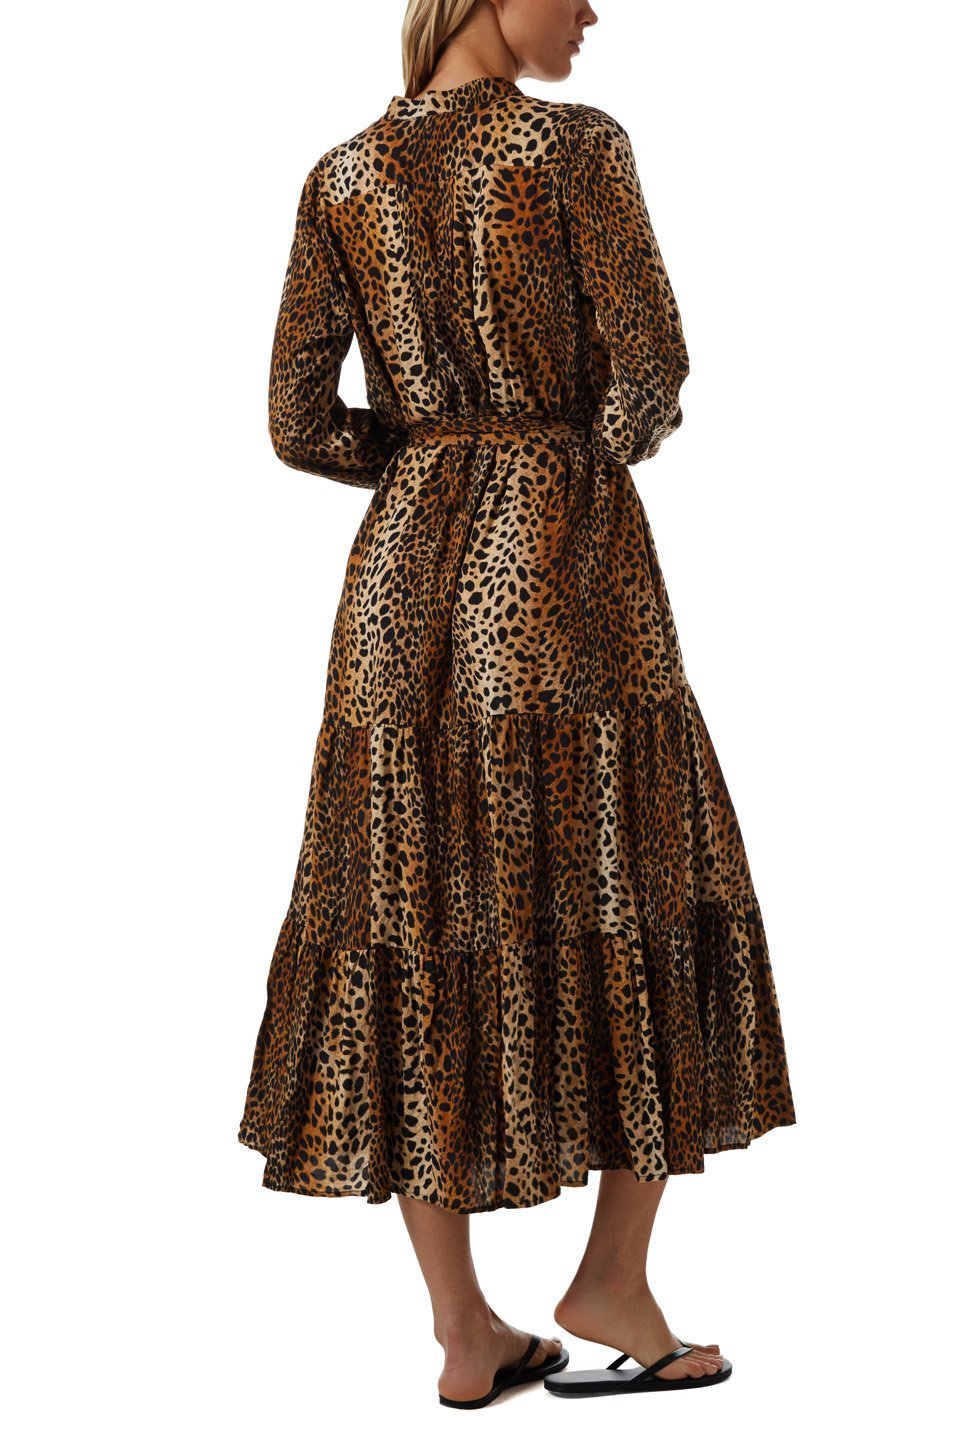 Sonja Cheetah Print Dress